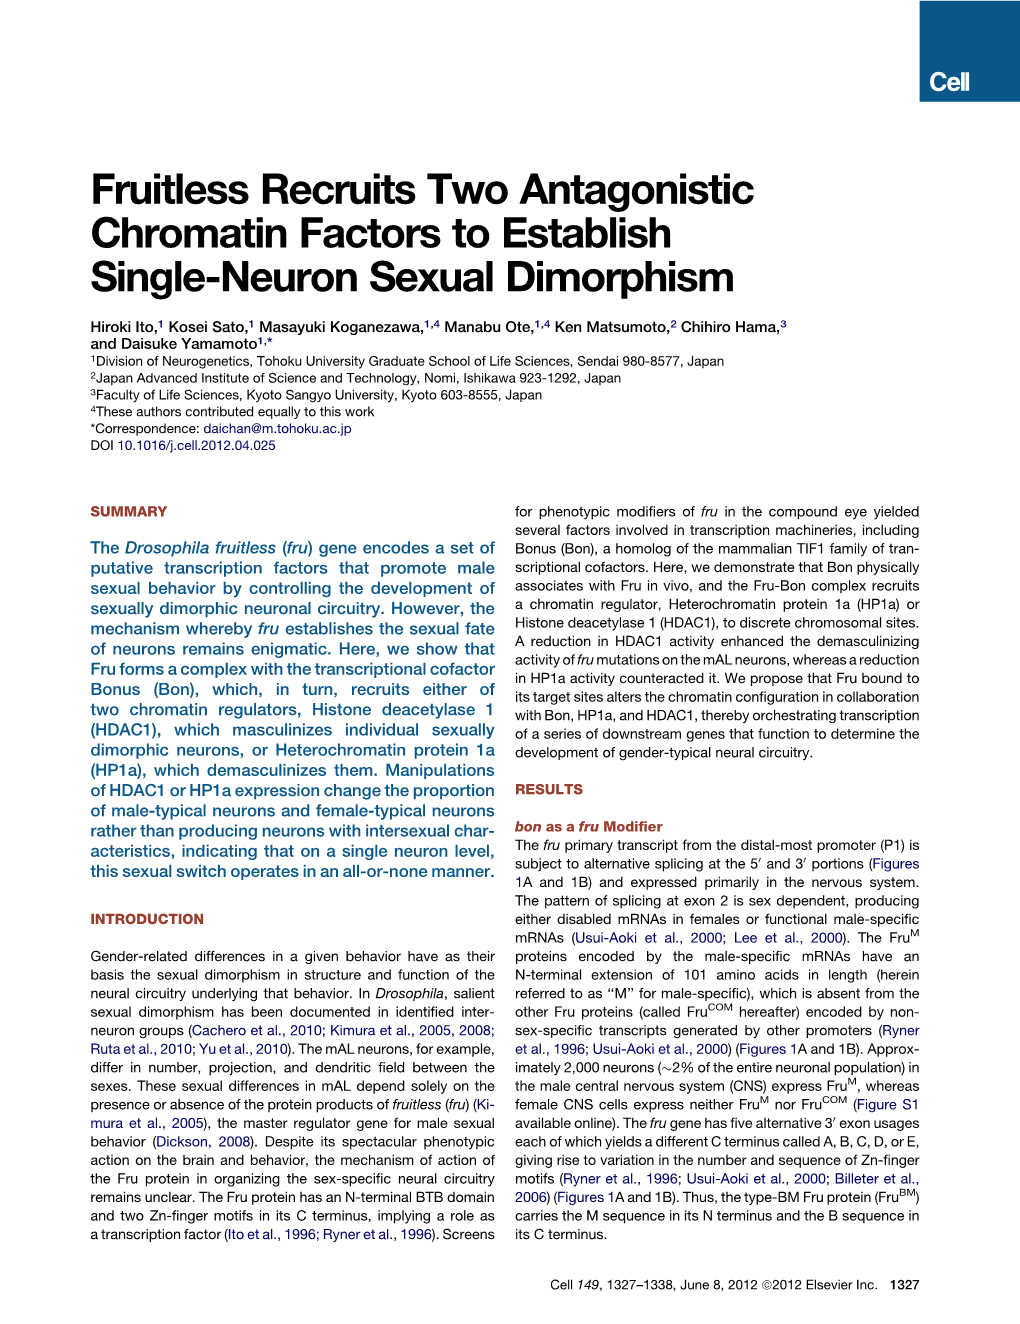 Fruitless Recruits Two Antagonistic Chromatin Factors to Establish Single-Neuron Sexual Dimorphism